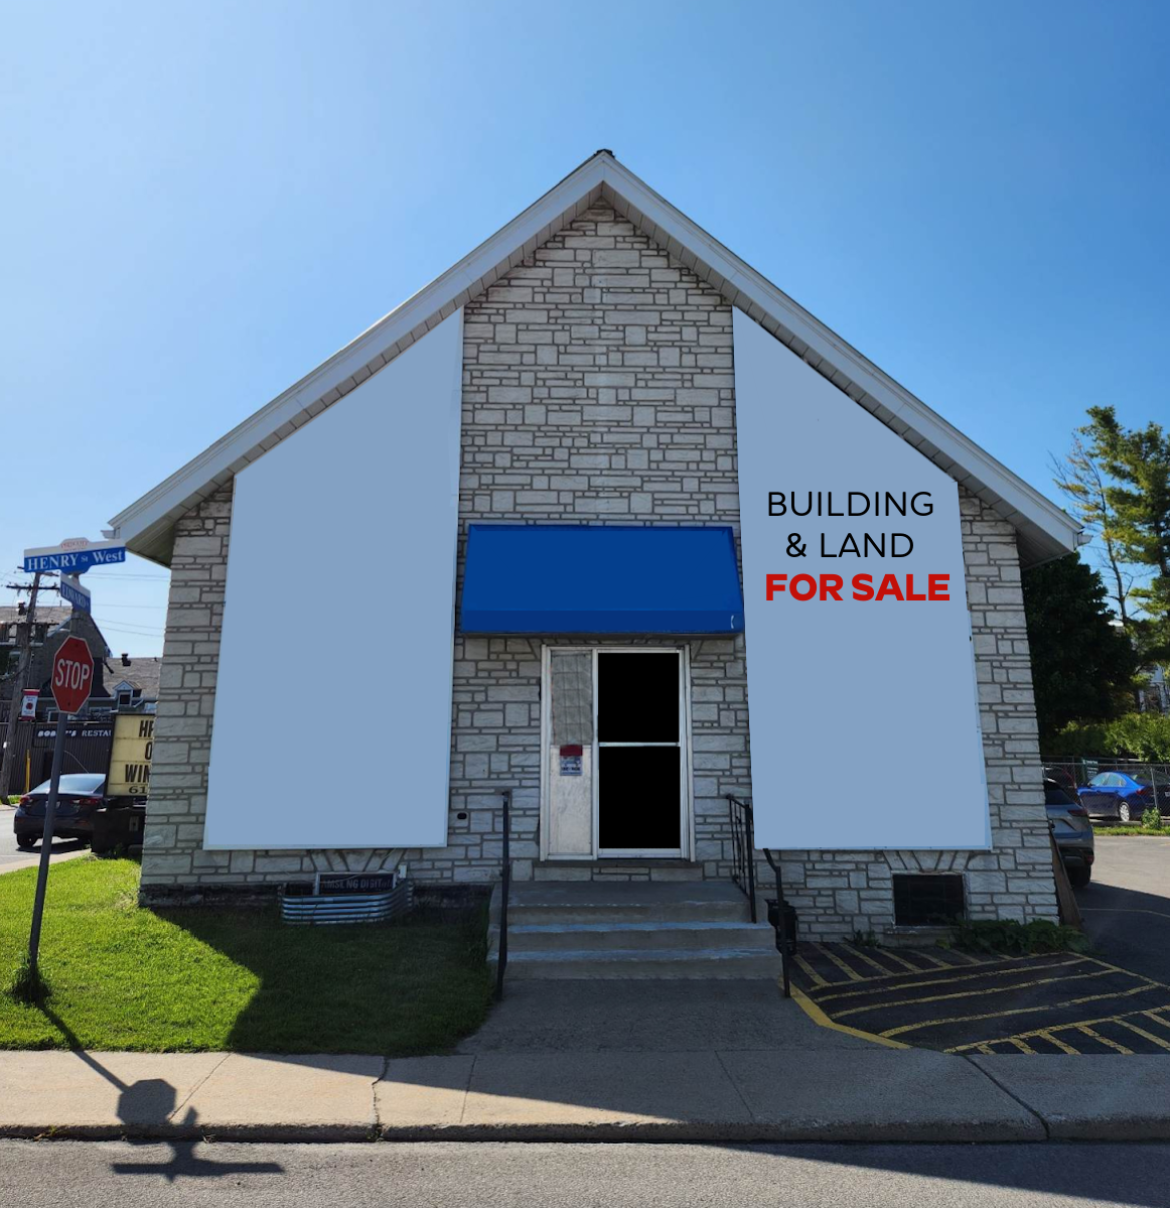 Prescott Ontario Commercial Real Estate For Sale